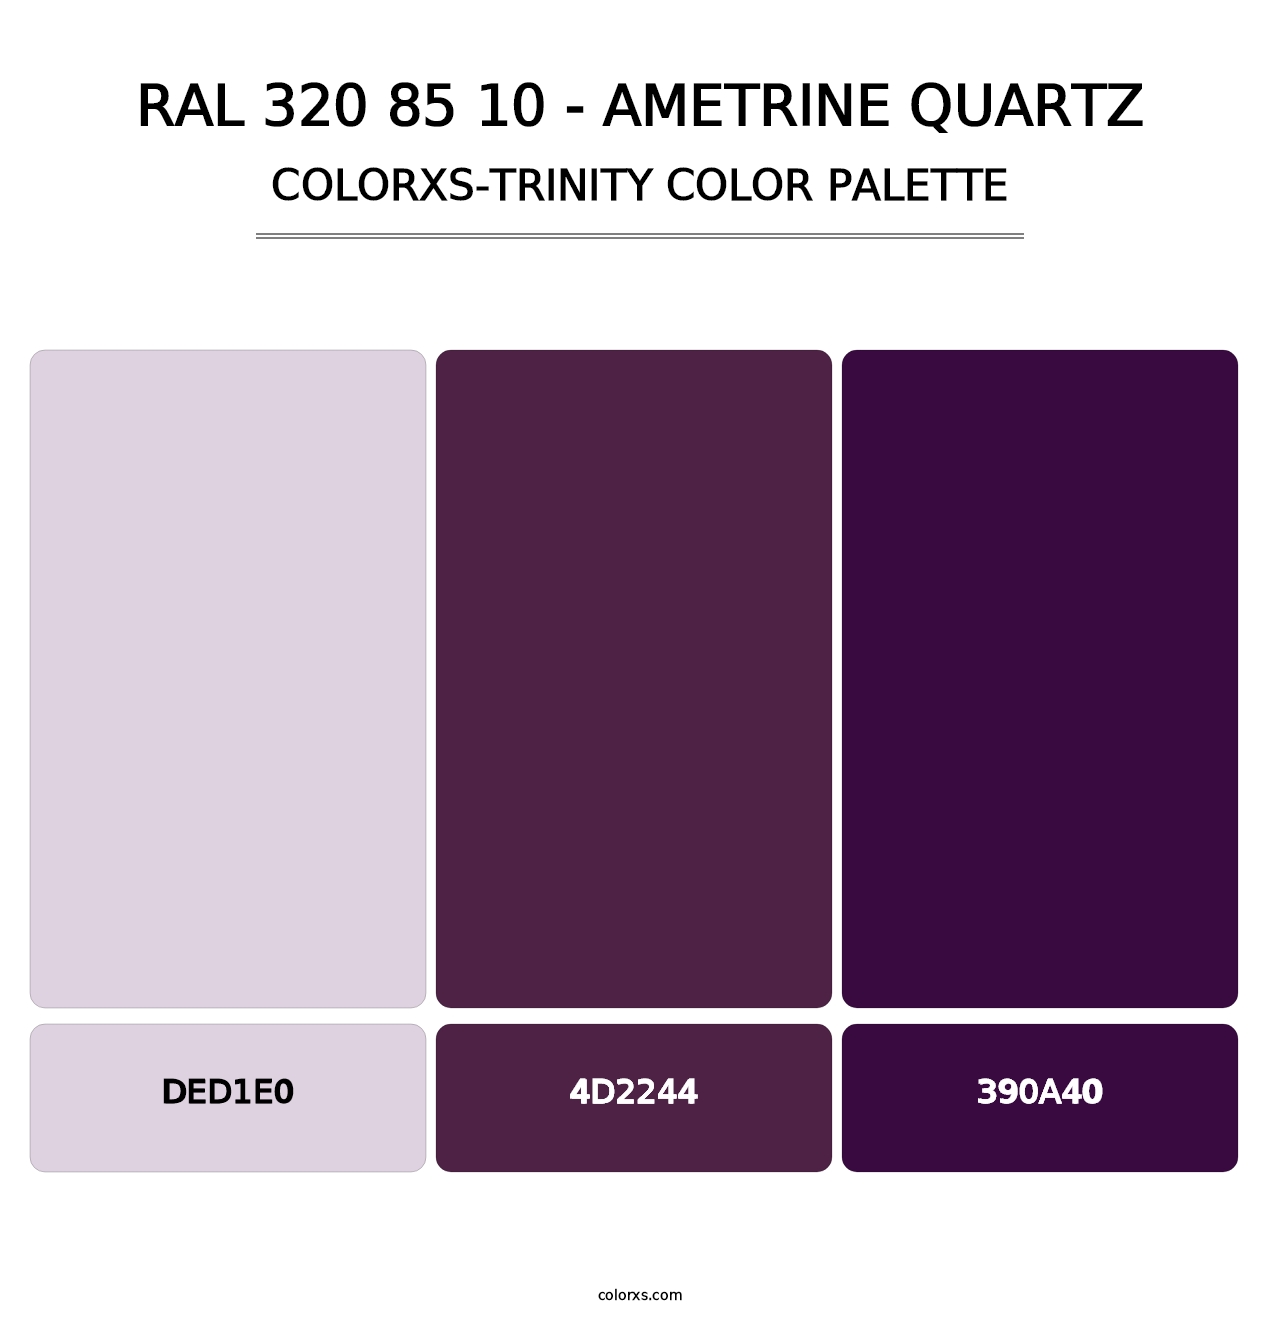 RAL 320 85 10 - Ametrine Quartz - Colorxs Trinity Palette